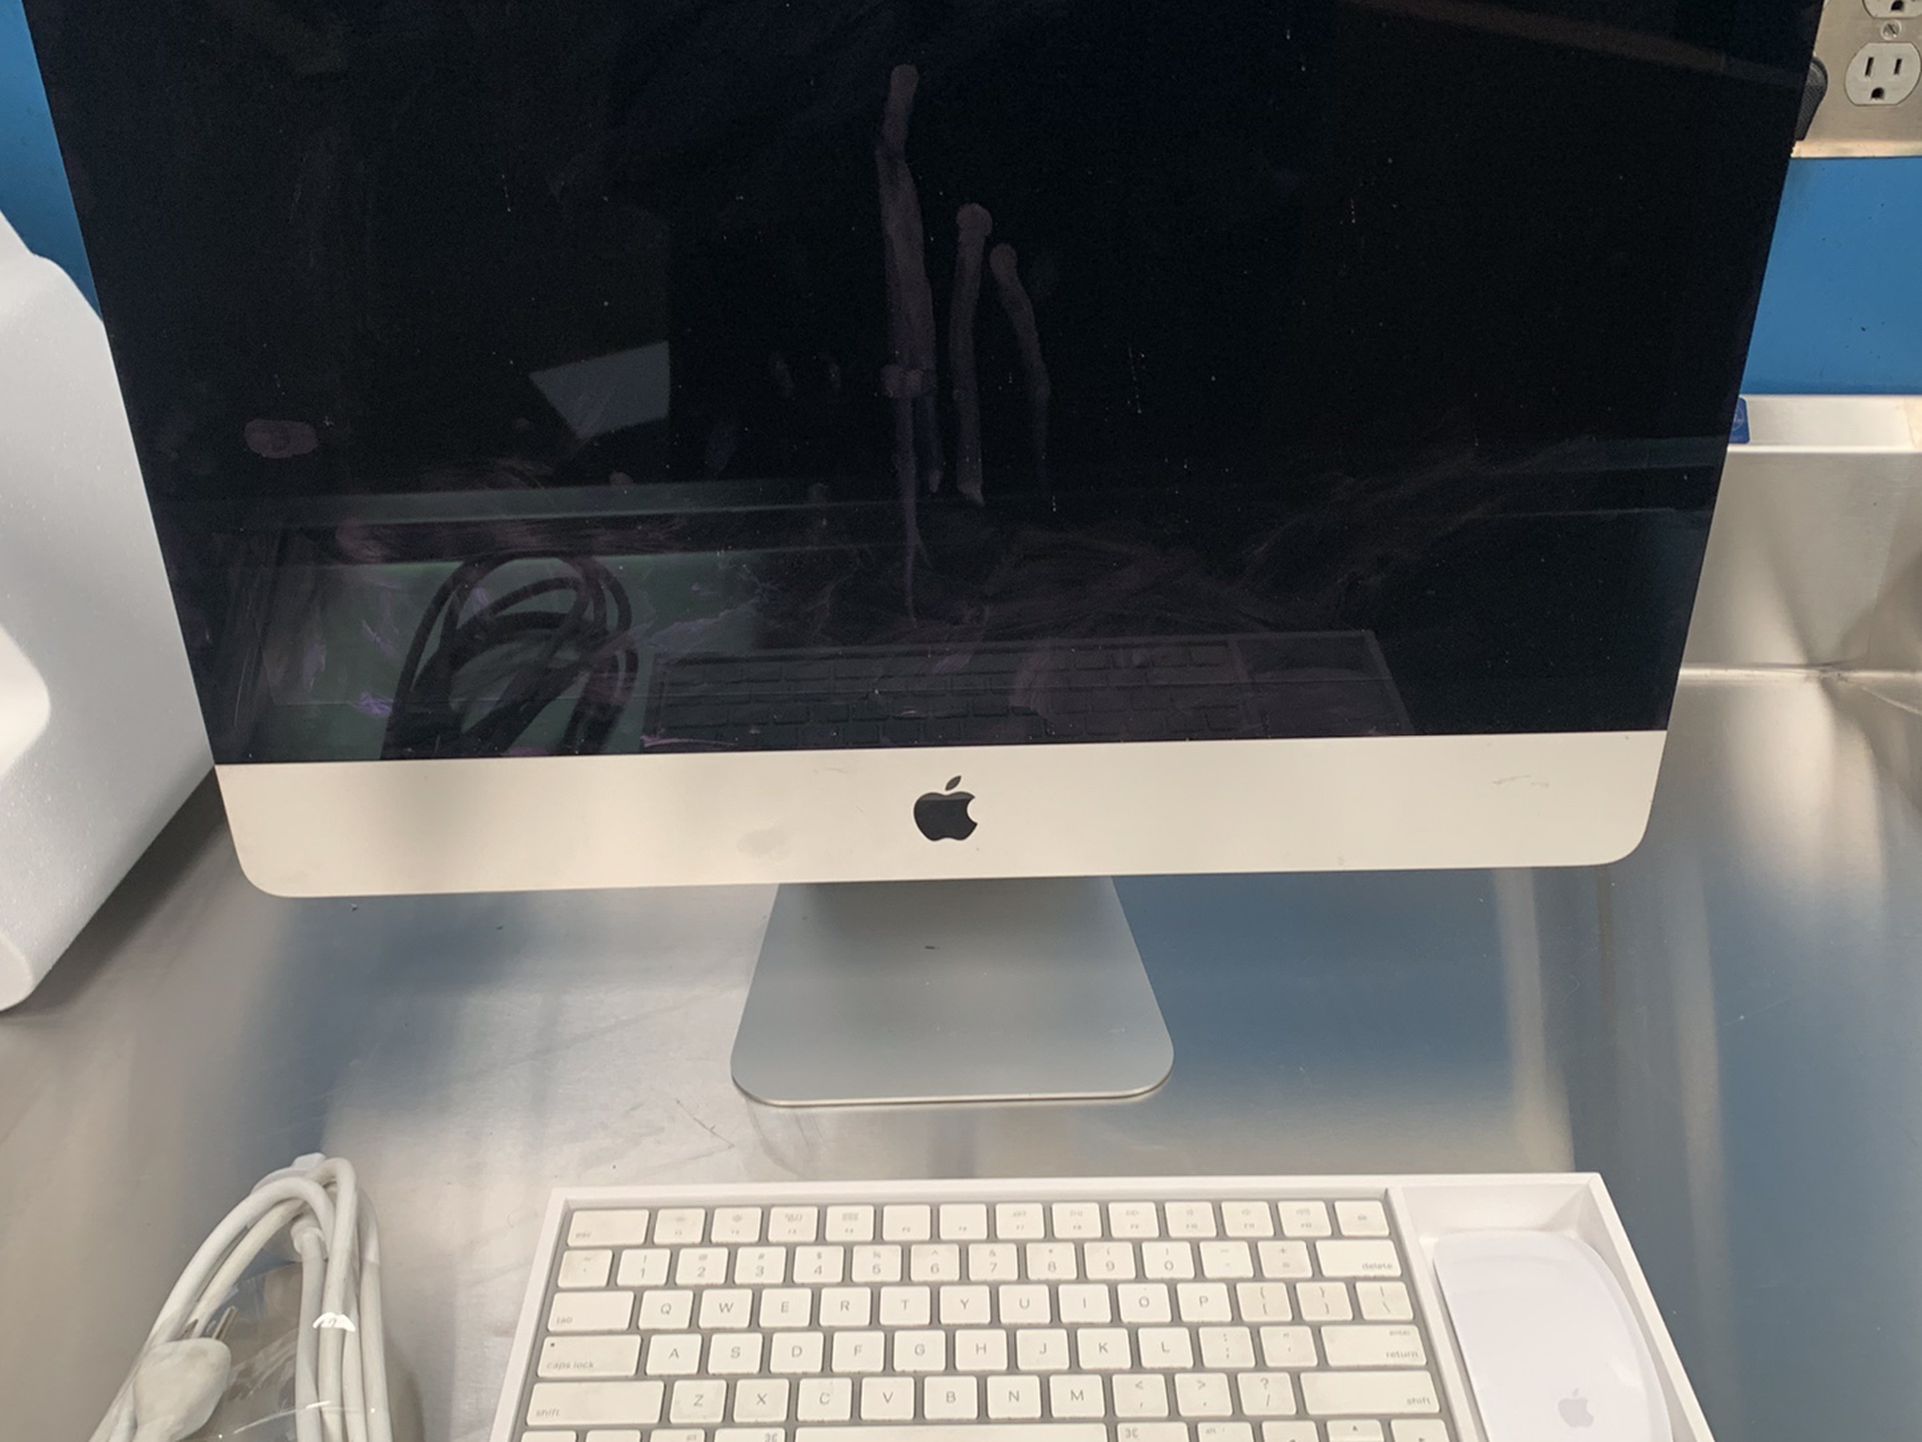 2015 iMac Core i5 2.8GHz (Late 2015) 1TB